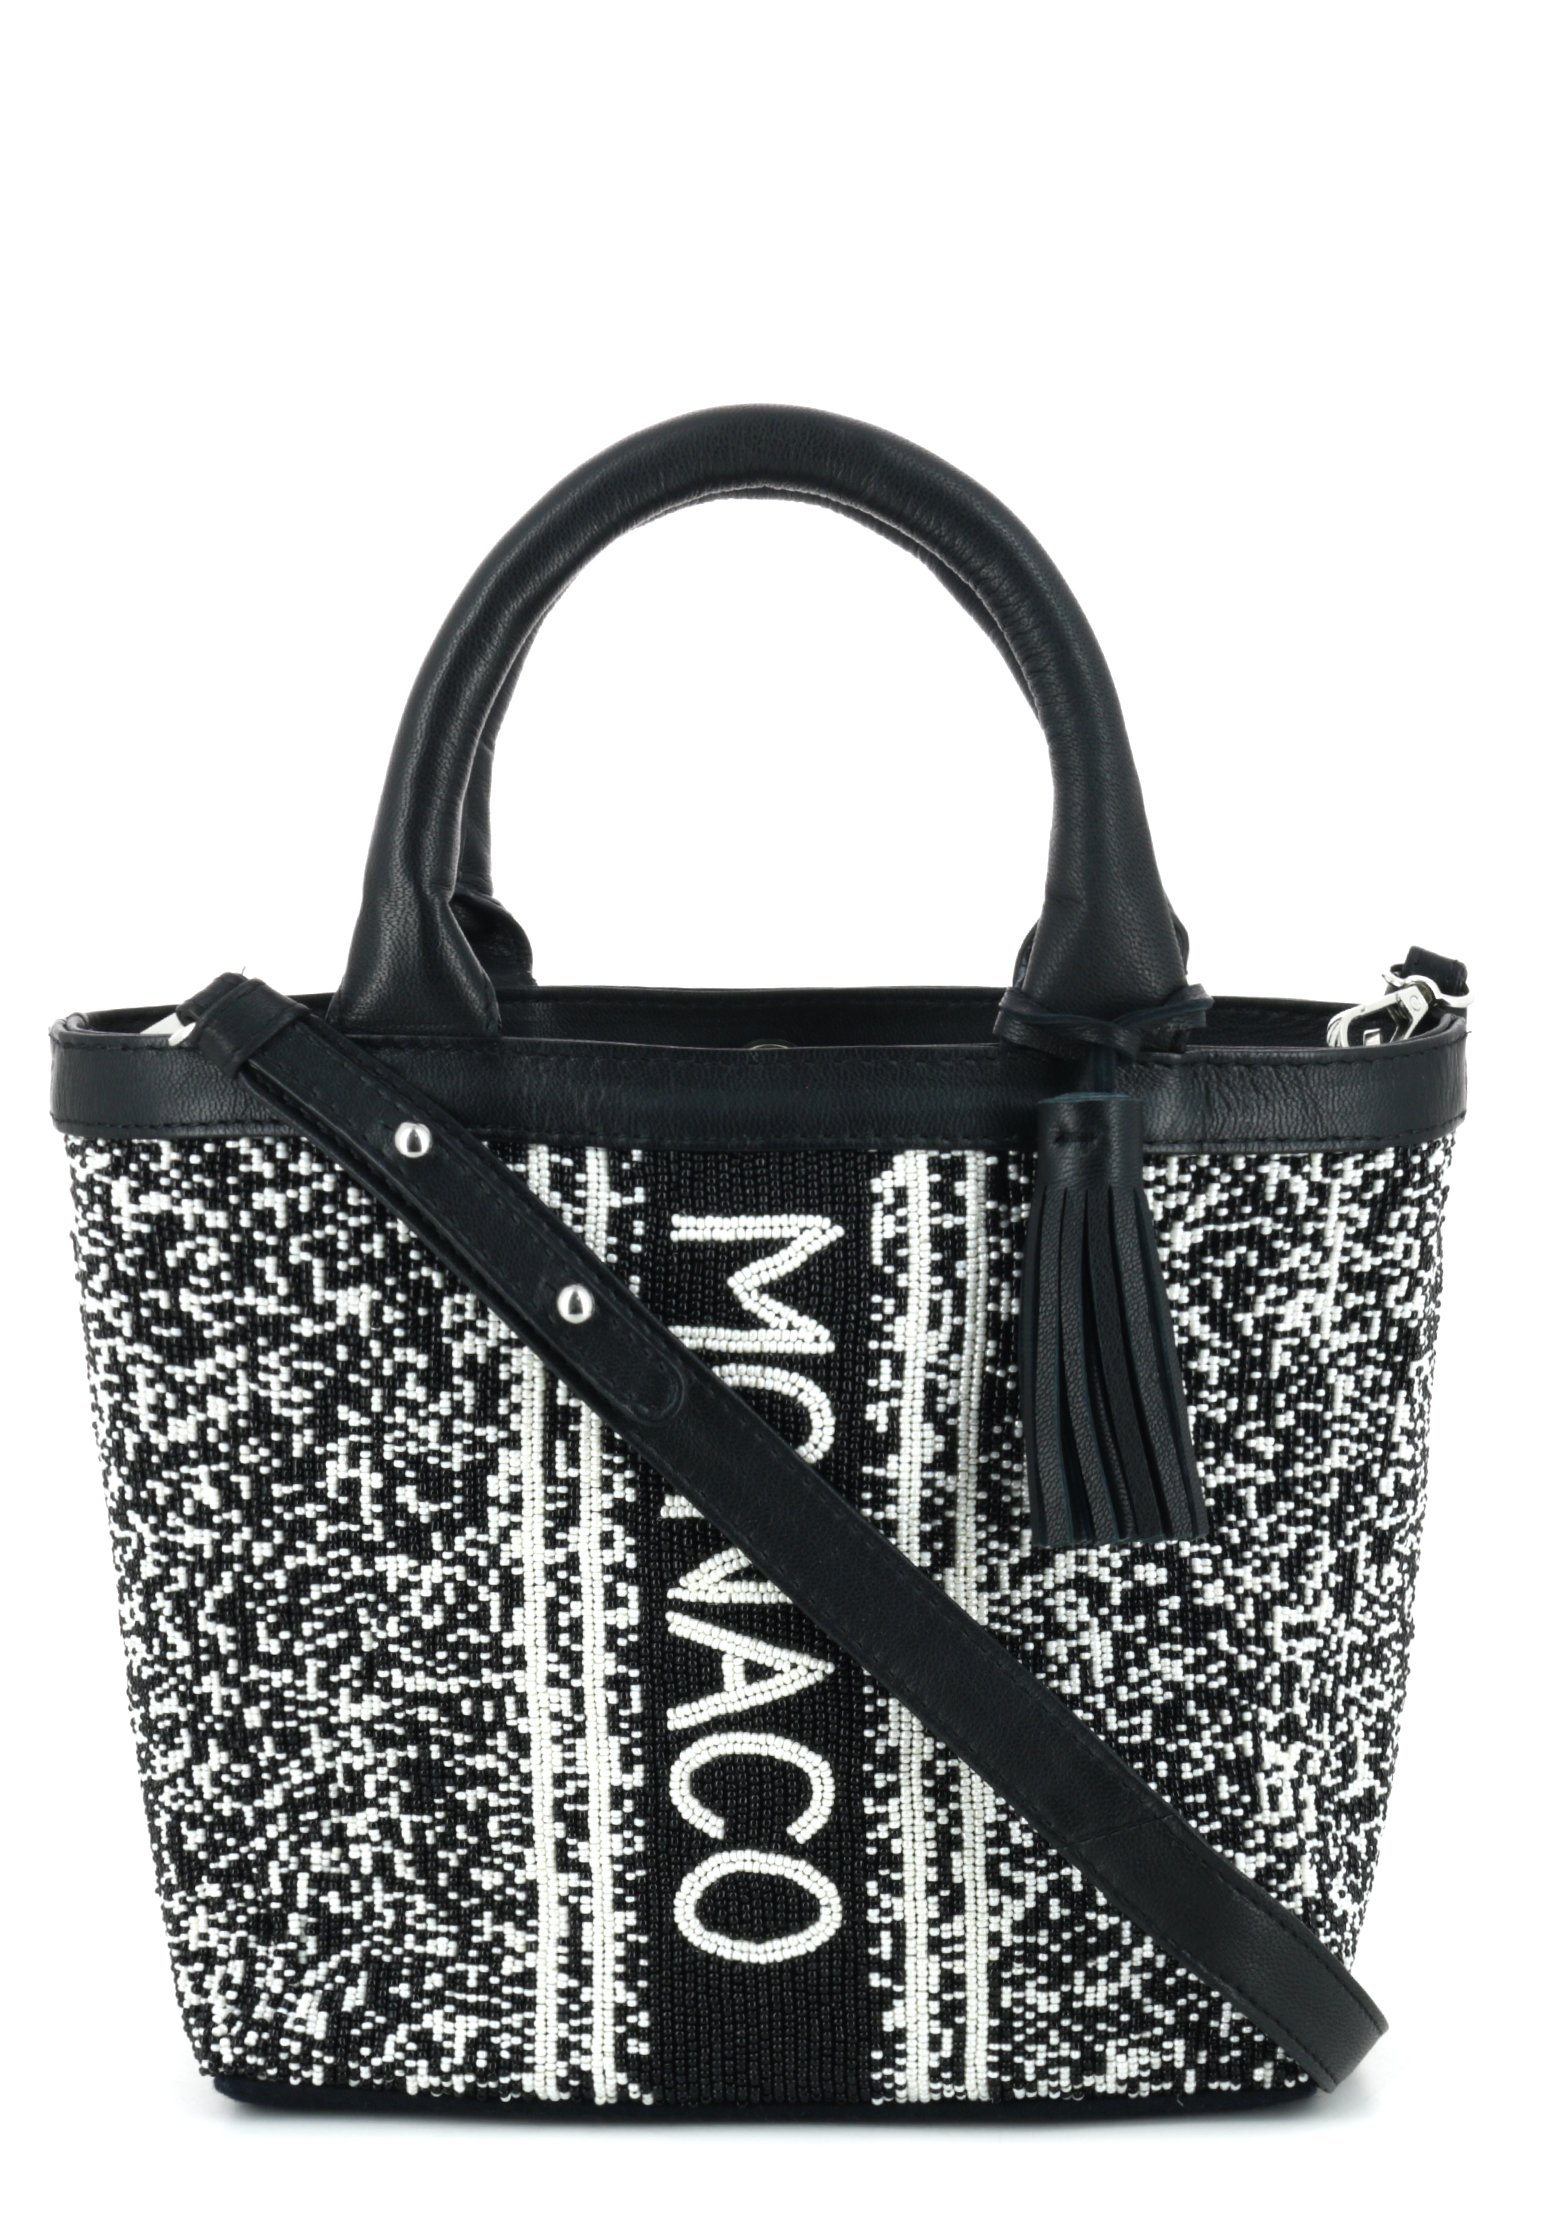 Bag DE SIENA Color: black (Code: 2320) in online store Allure